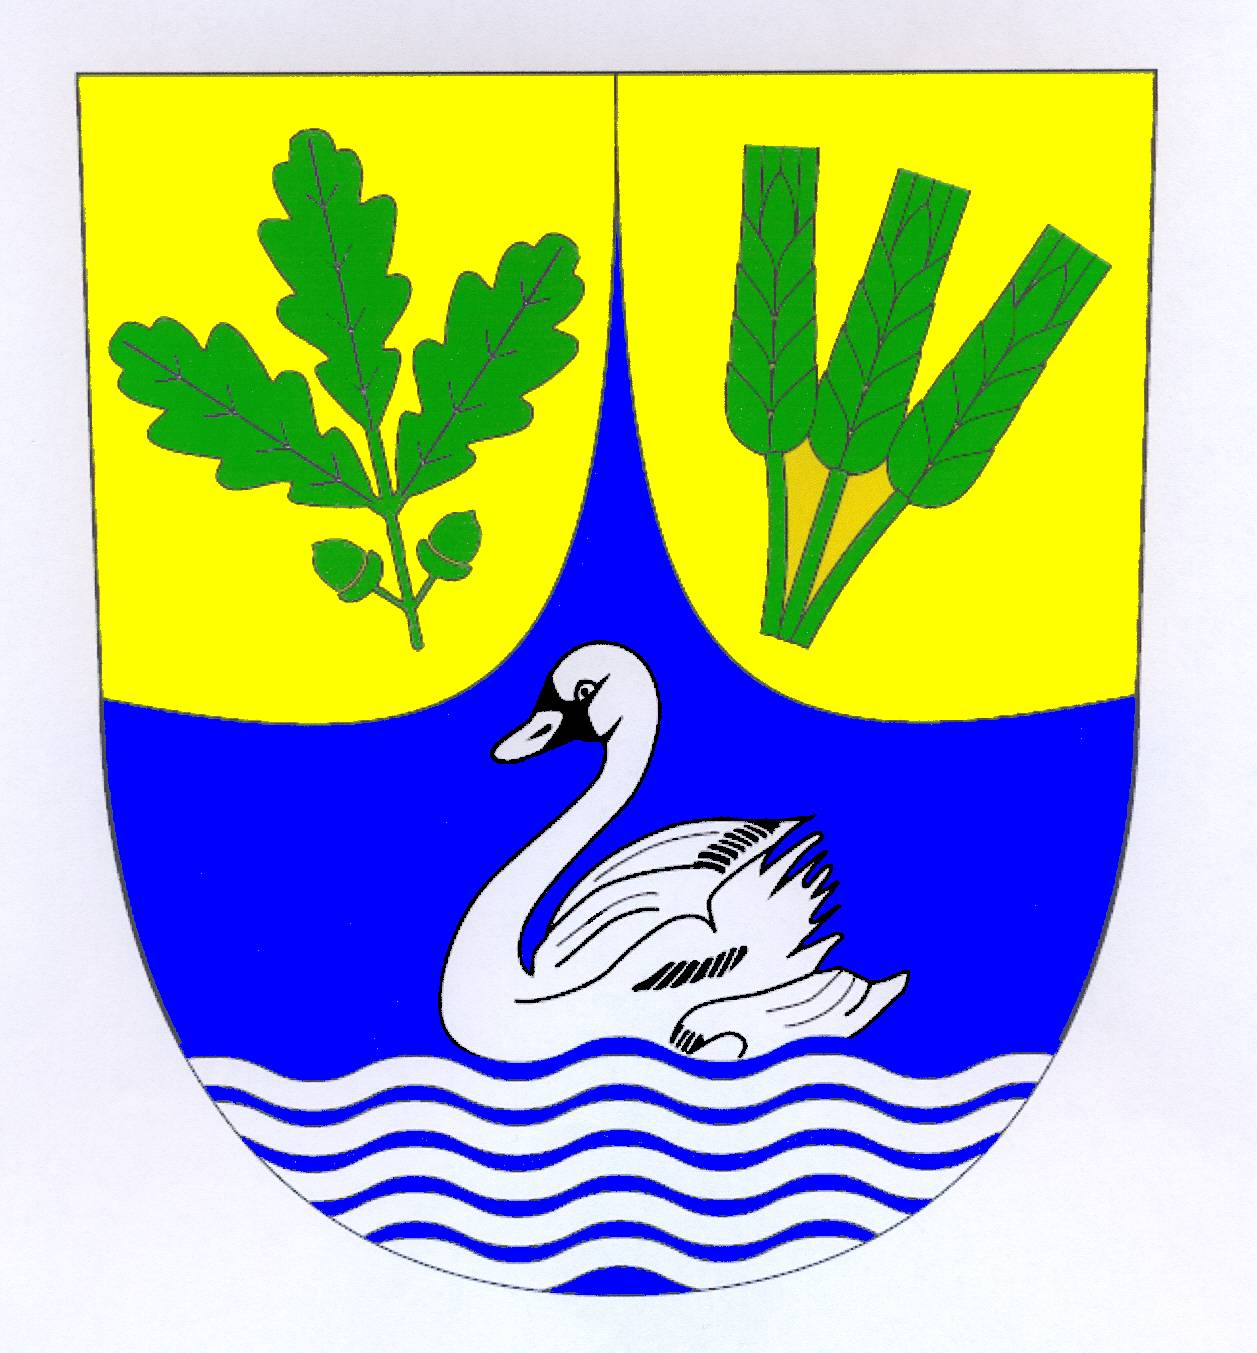 Wappen Gemeinde Brodersby, Kreis Rendsburg-Eckernförde